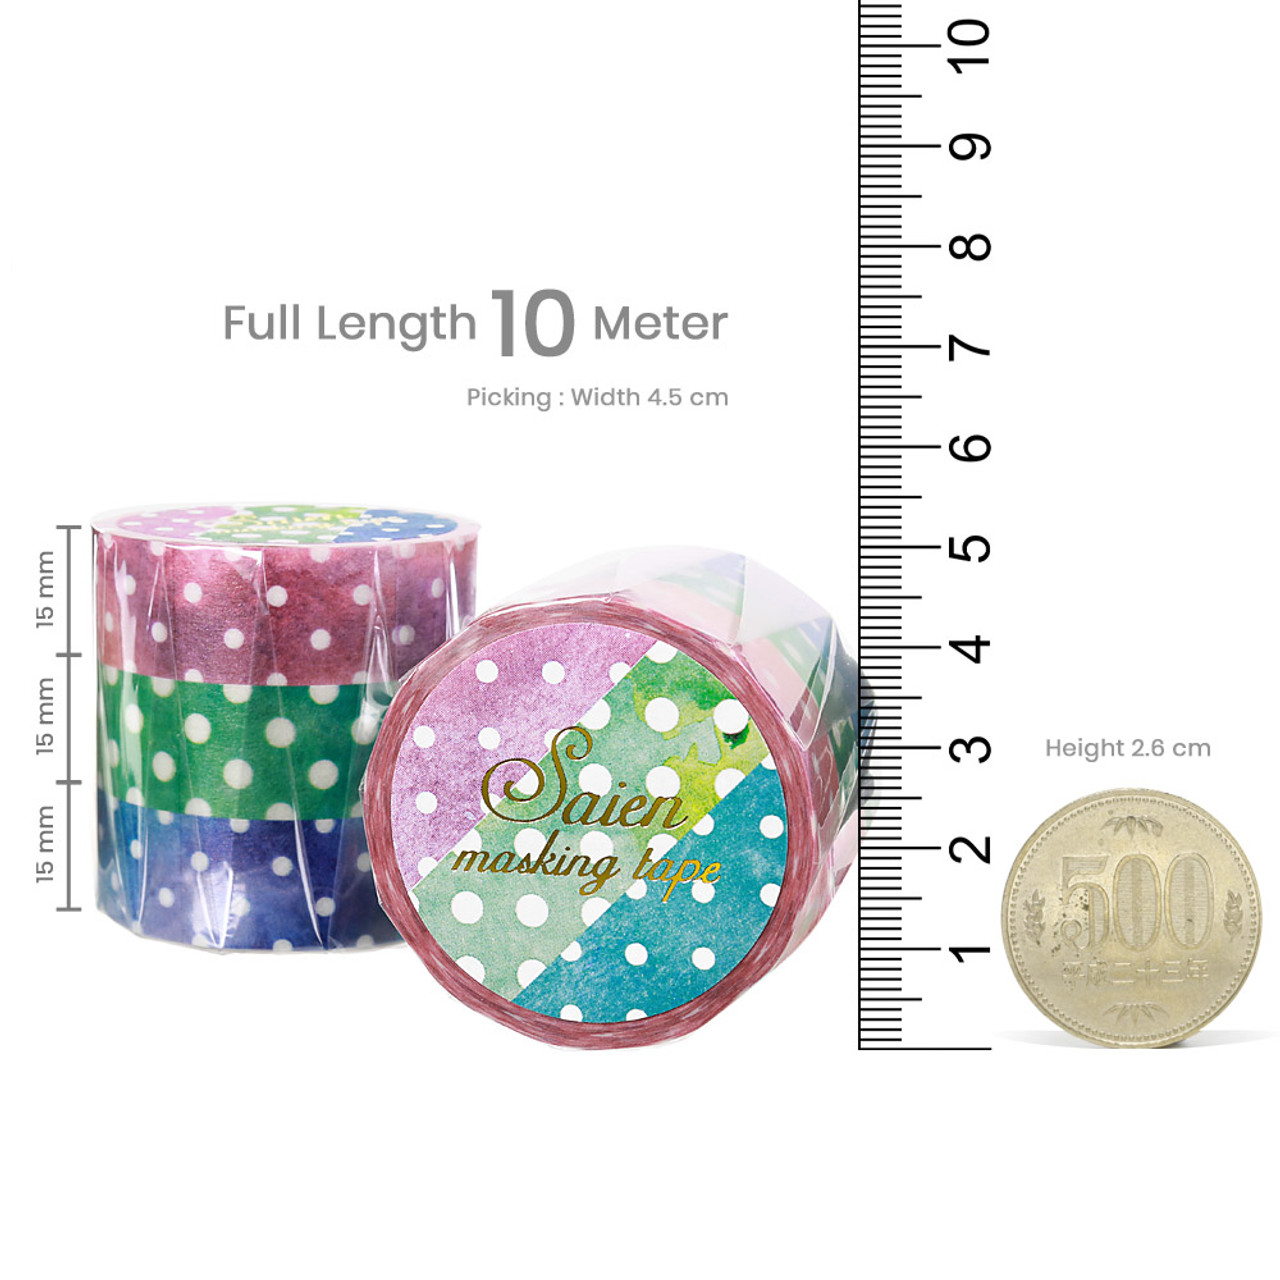 Saien Washi Masking Tape Polka Dots 3 Roll Set ( Proportion )